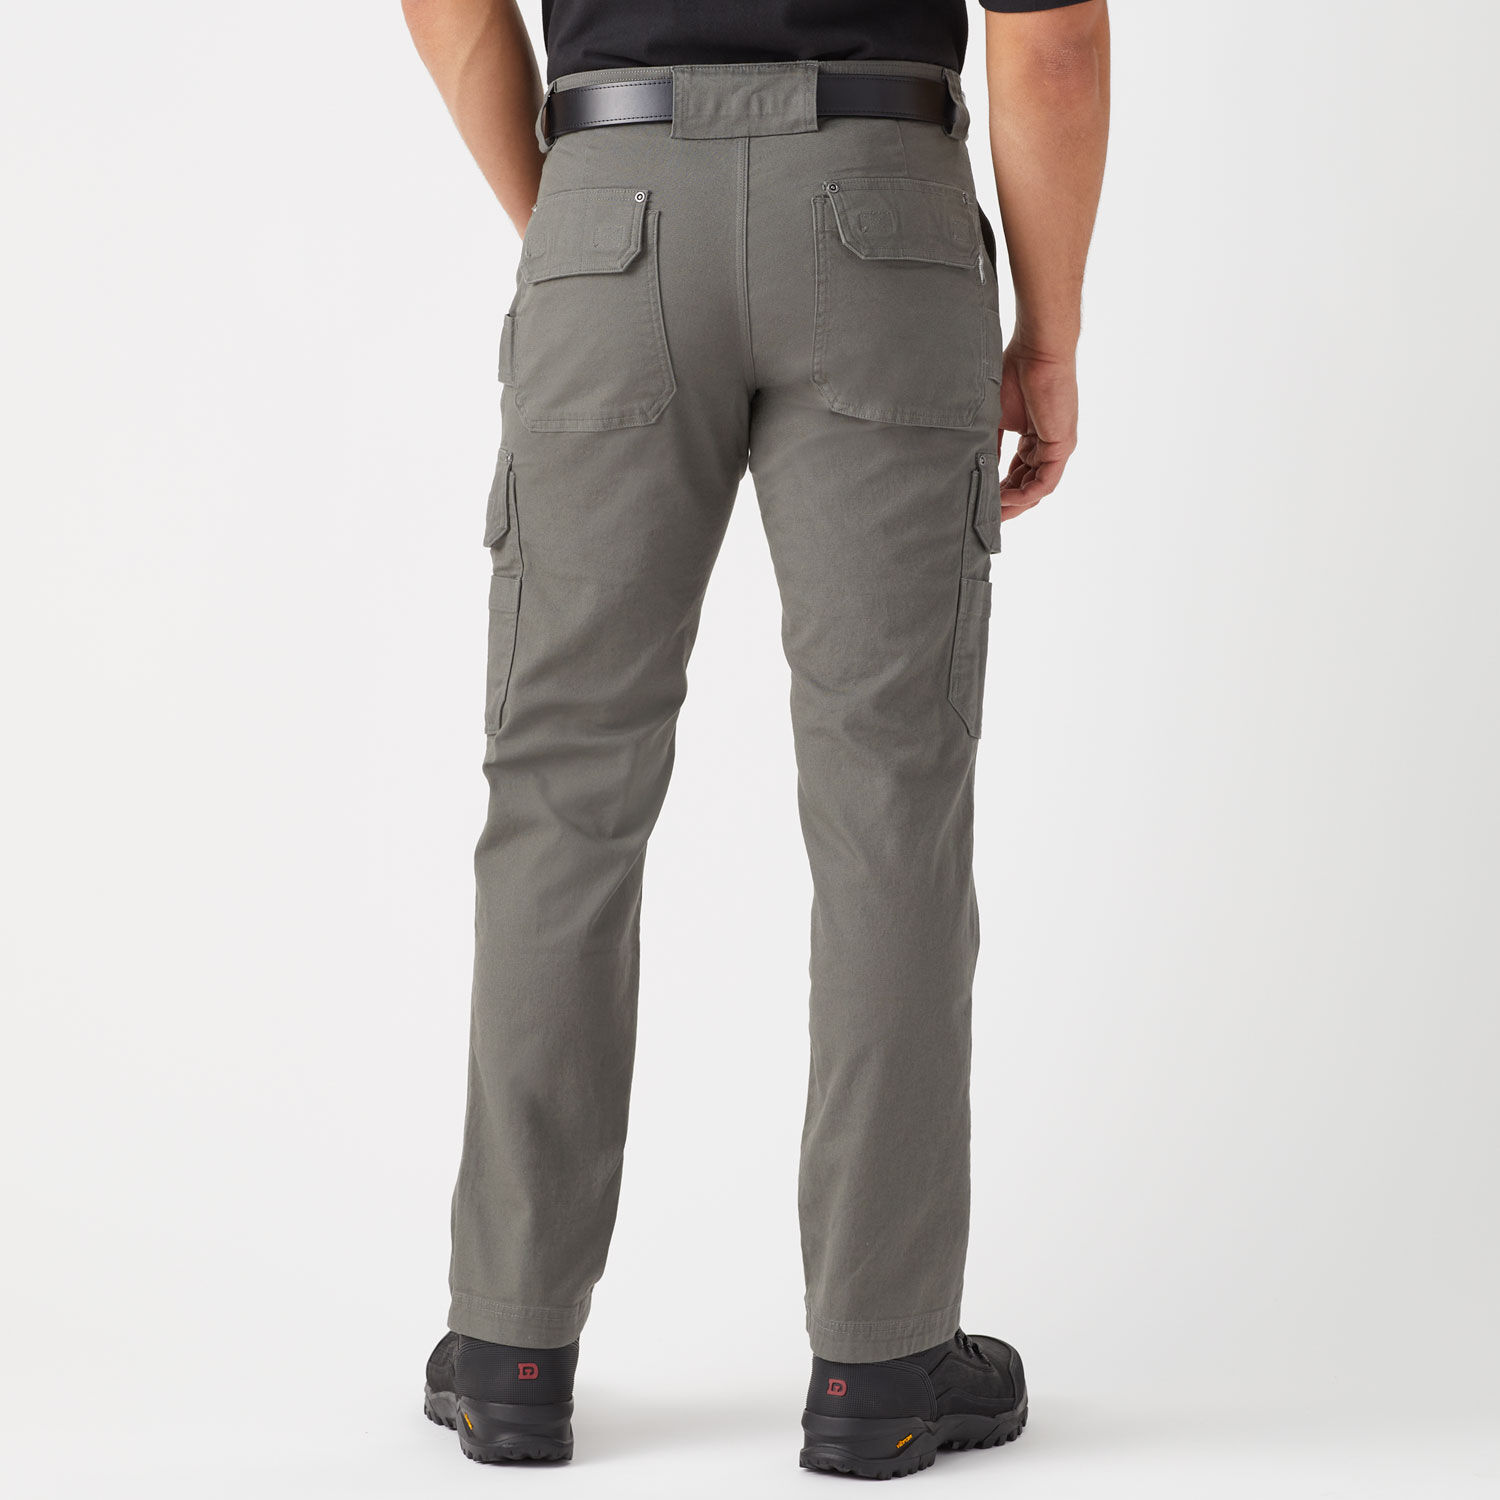 Skulinewears Mens Construction Pants Tactical Field Safety Trousers  Multi-Pocket Carpenter Utility pocket Work Pants Khaki W34-L34 - Walmart.com